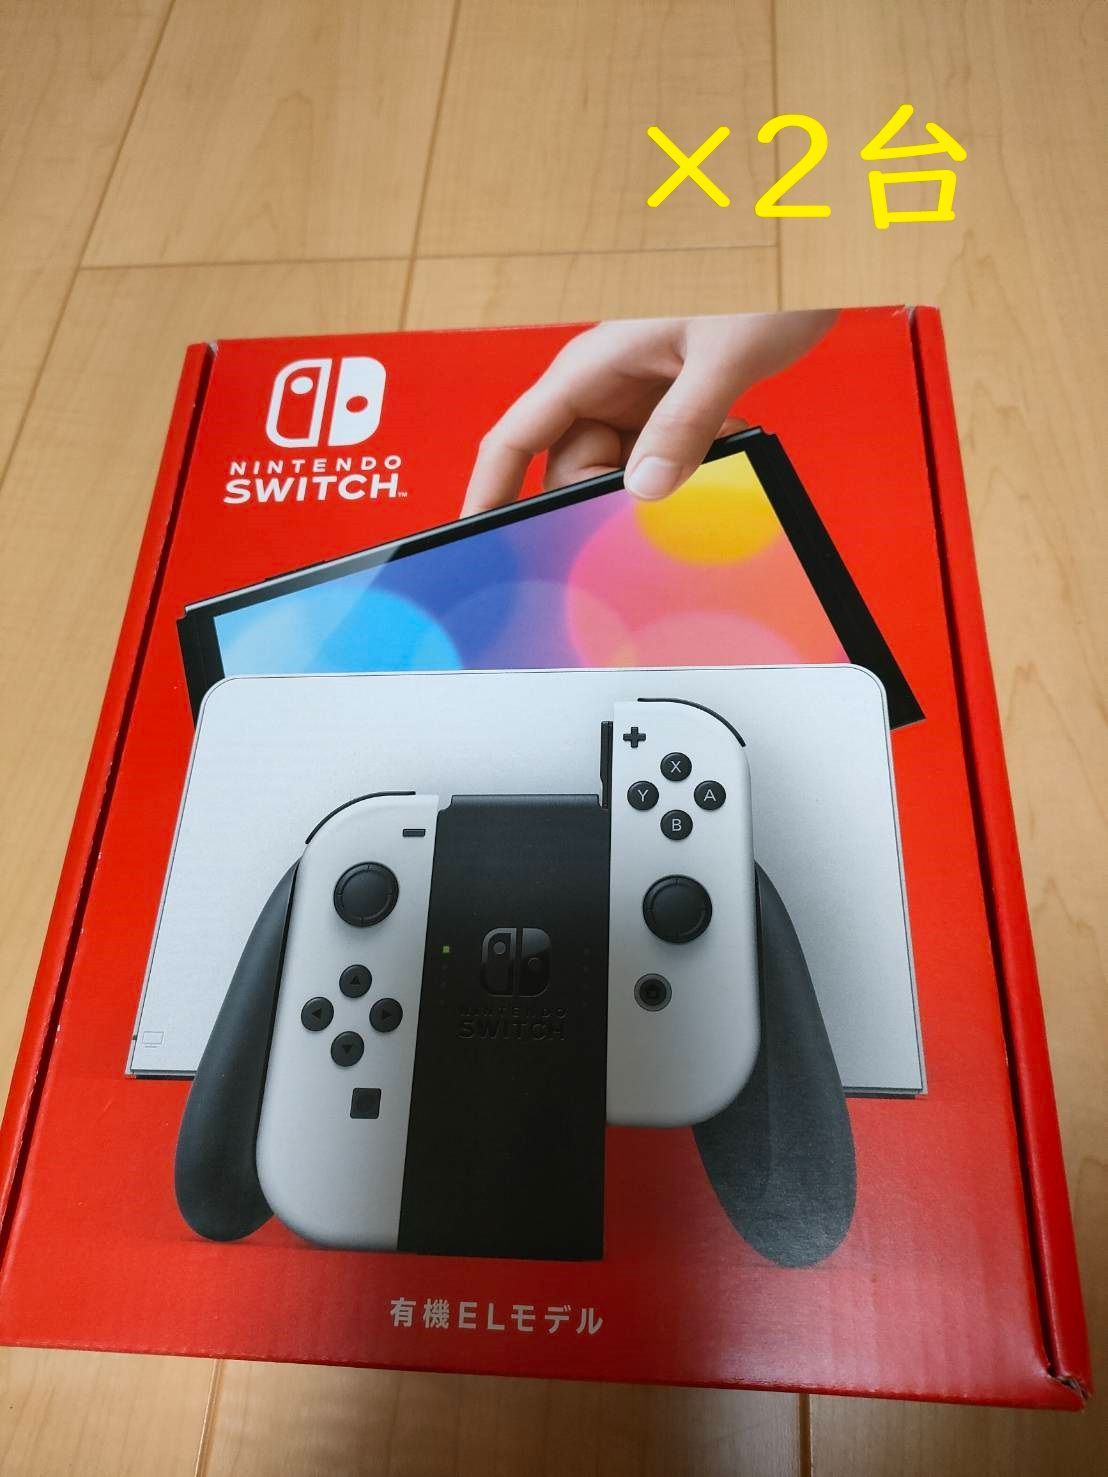 Nintendo Switch 新型 有機ELモデル ホワイト 2台セット - メルカリ